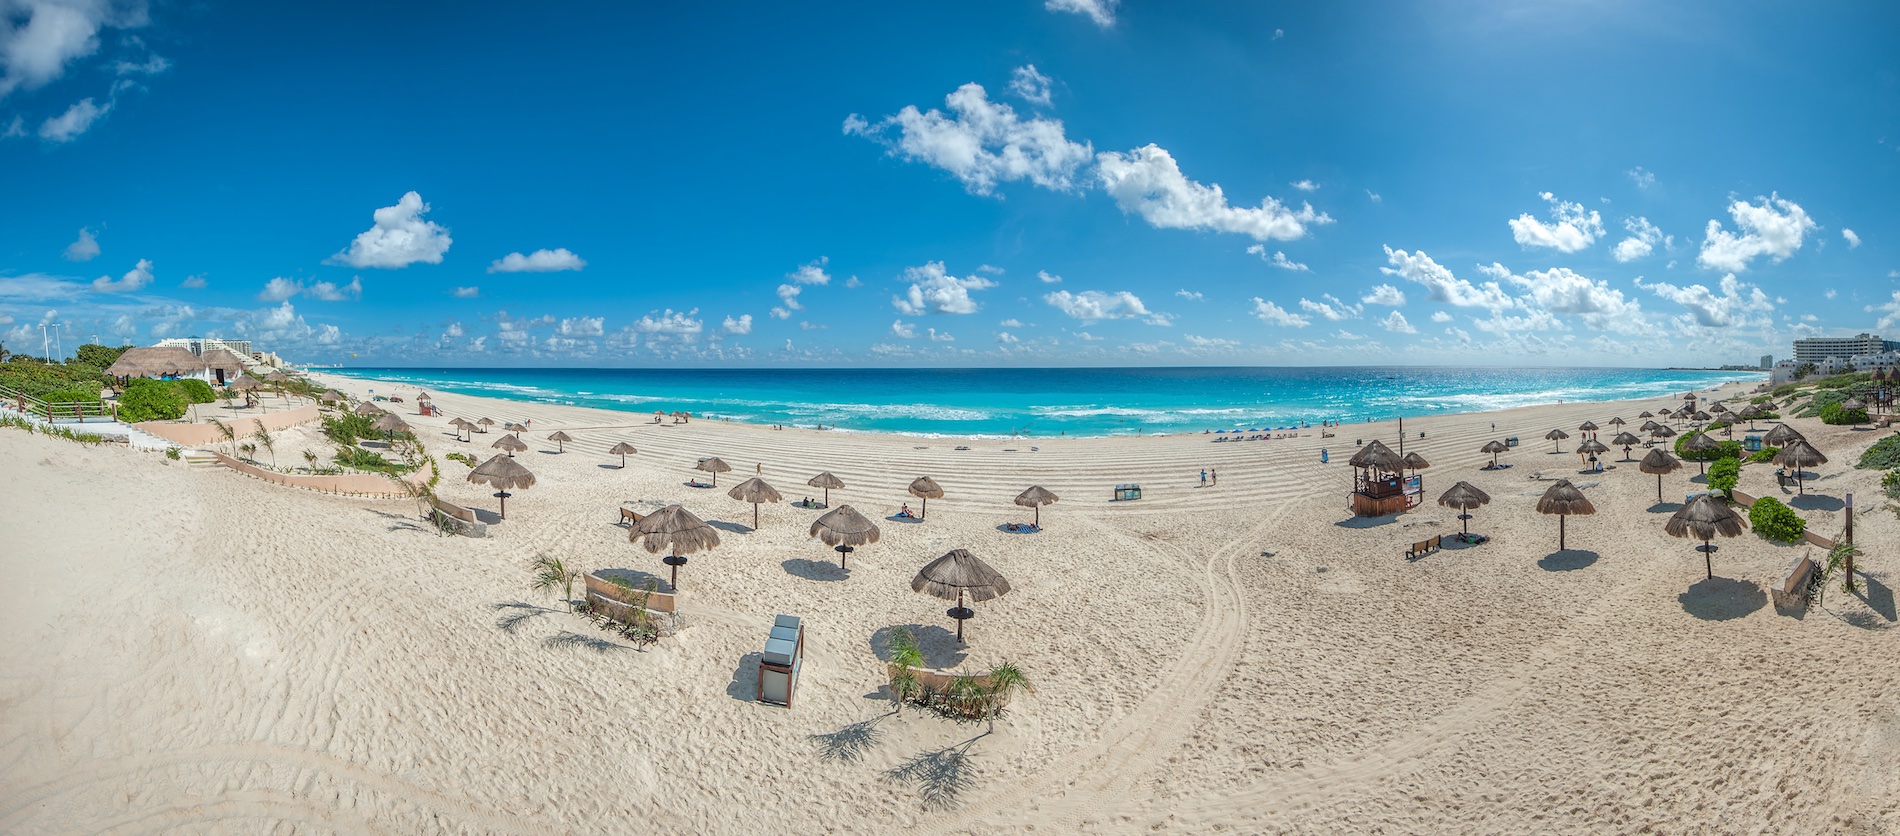 Cancun in Mexico Copyright © AdobeStock 112809028 javarman